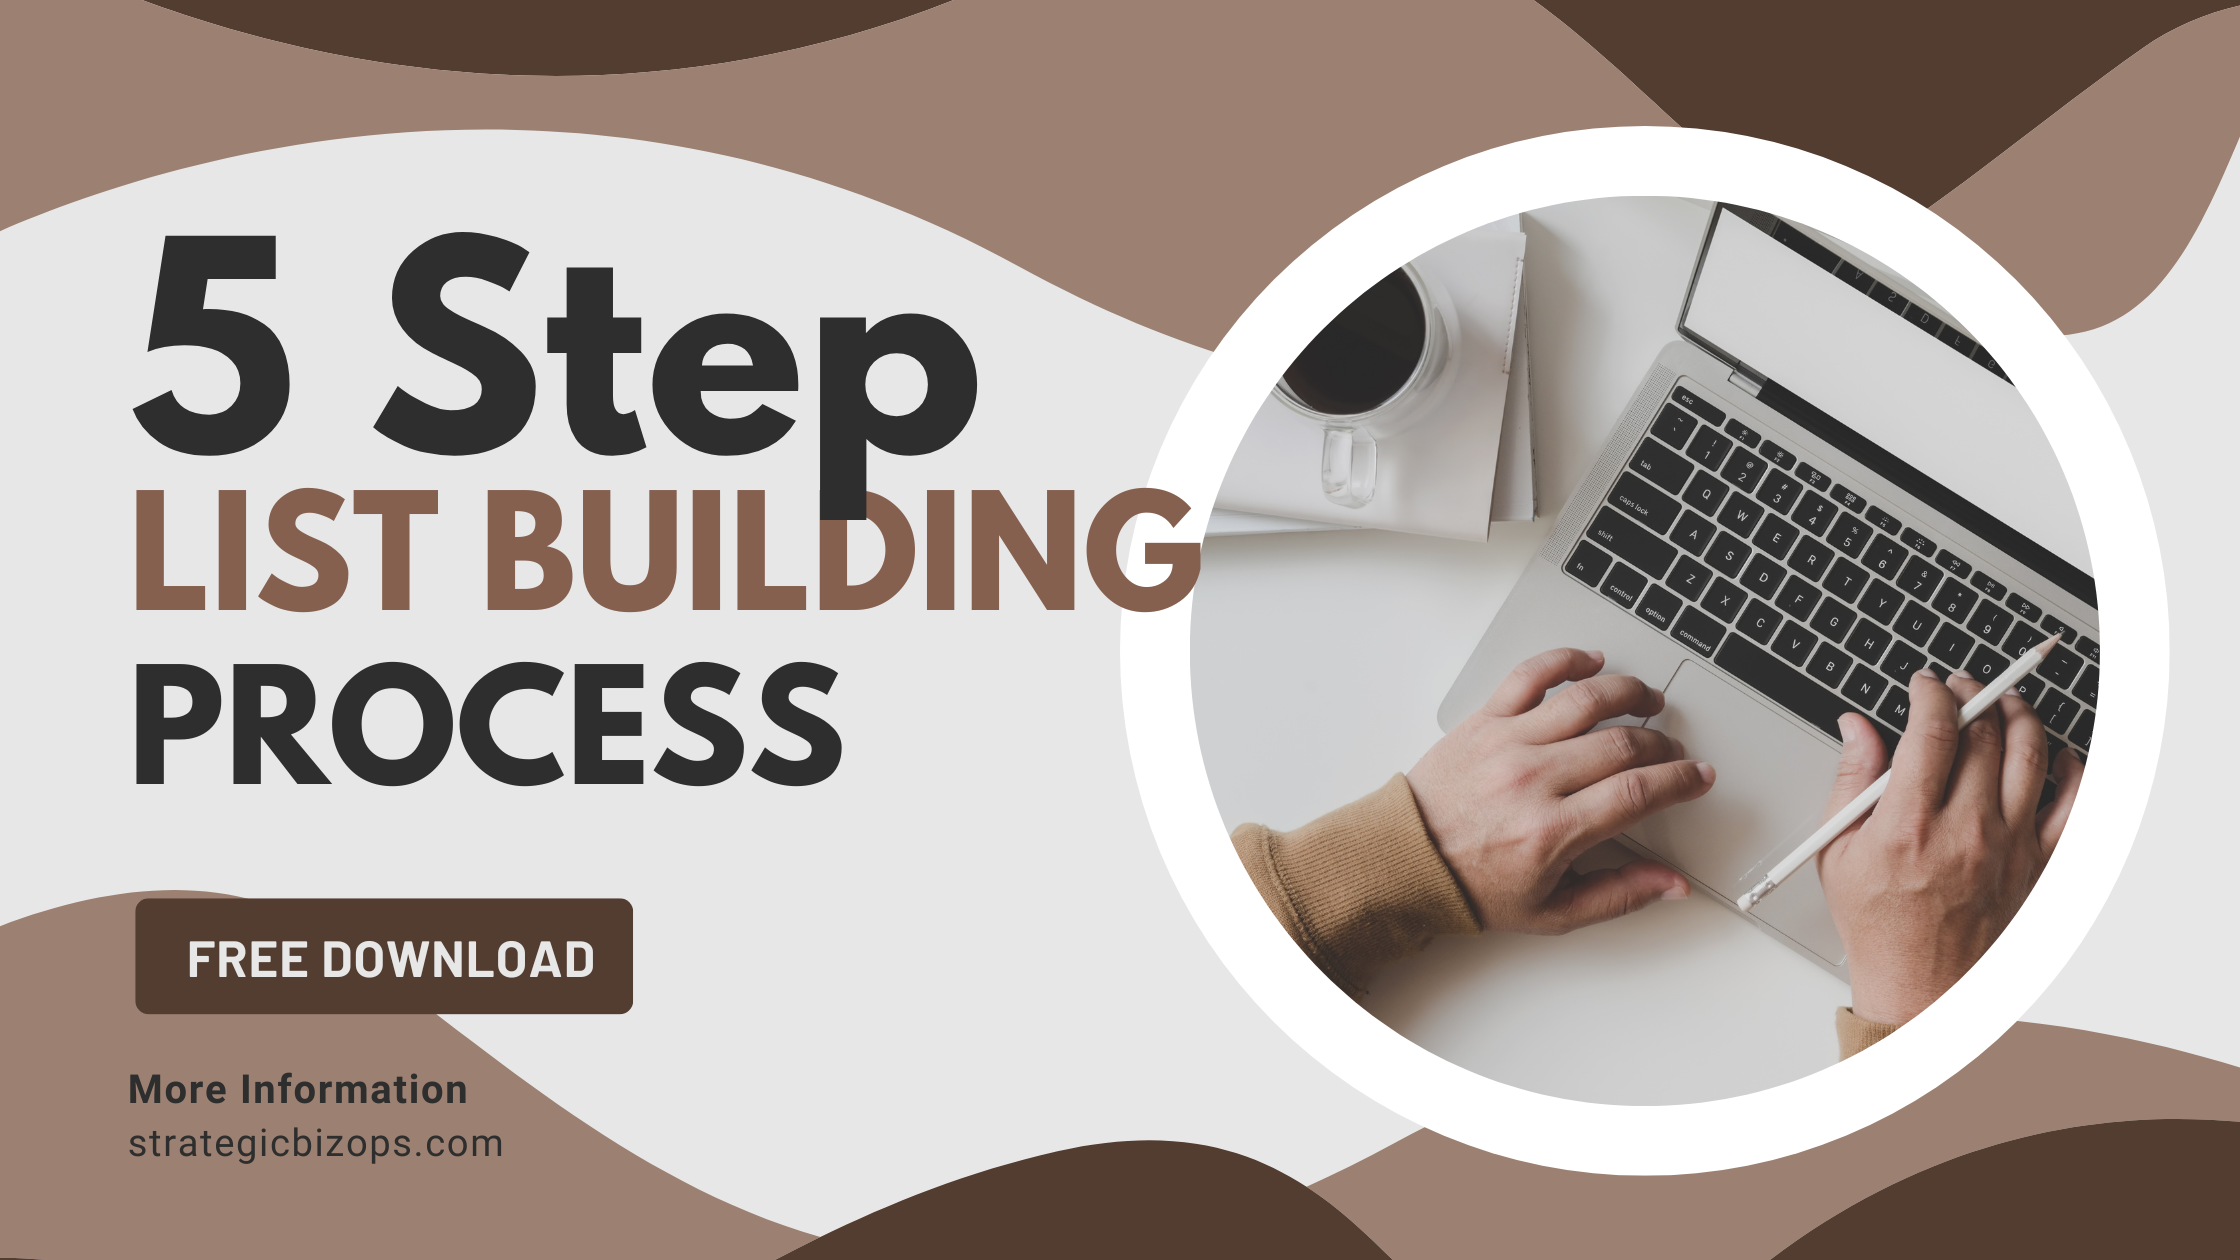 5 Step List Building Process